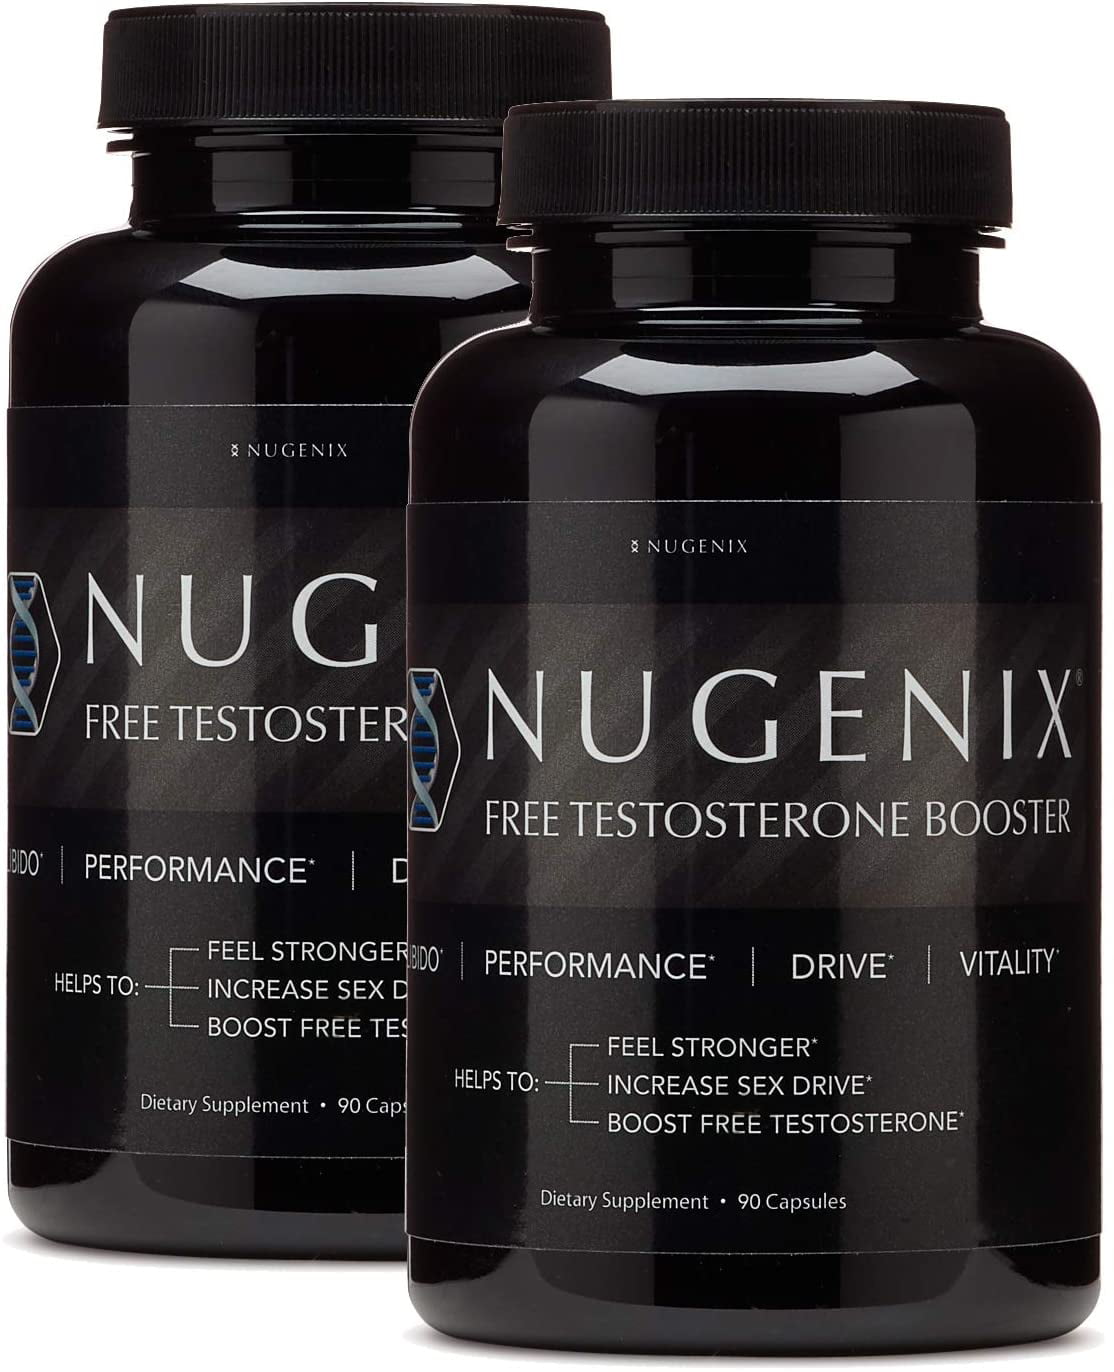 Nugenix Free Testosterone Booster Test 90 Ct 2.